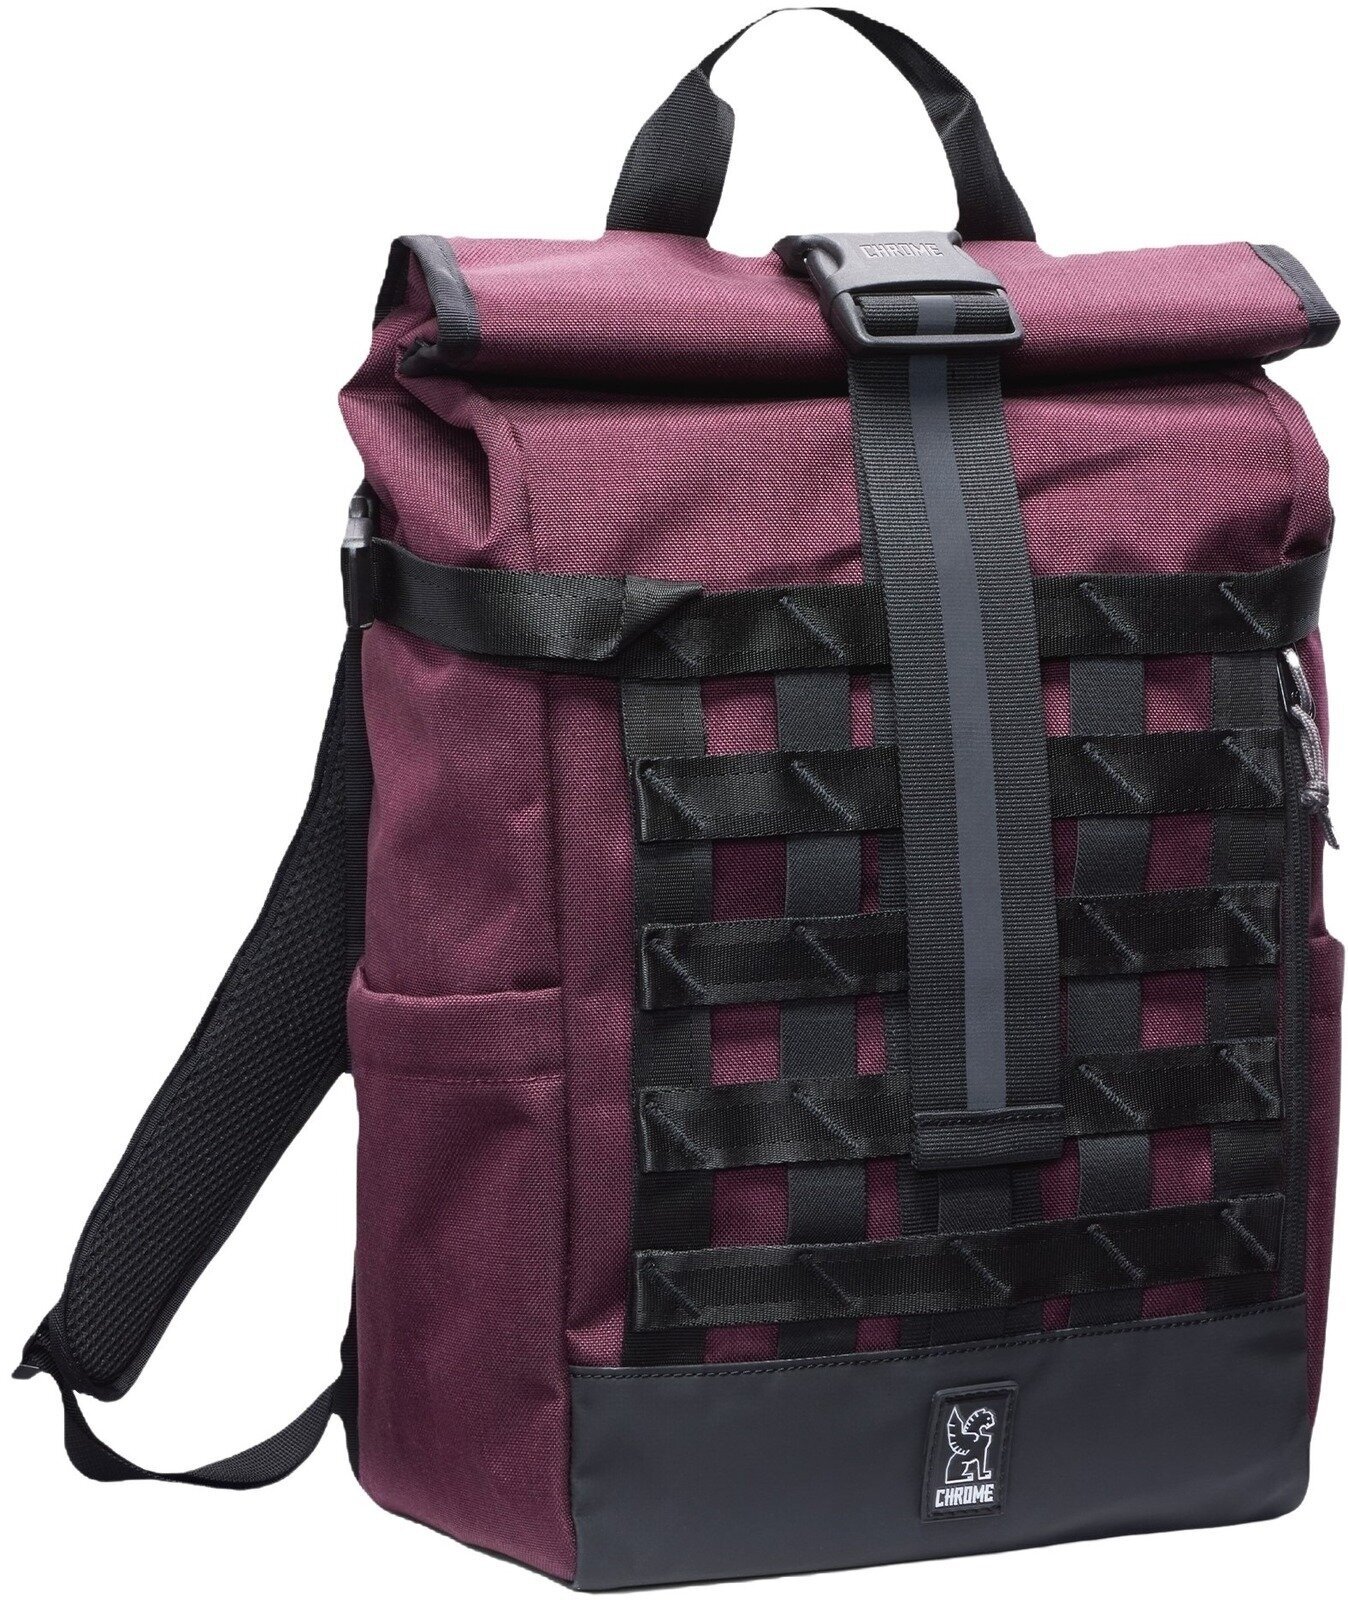 Lifestyle Rucksäck / Tasche Chrome Barrage Backpack Royale 18 L Rucksack